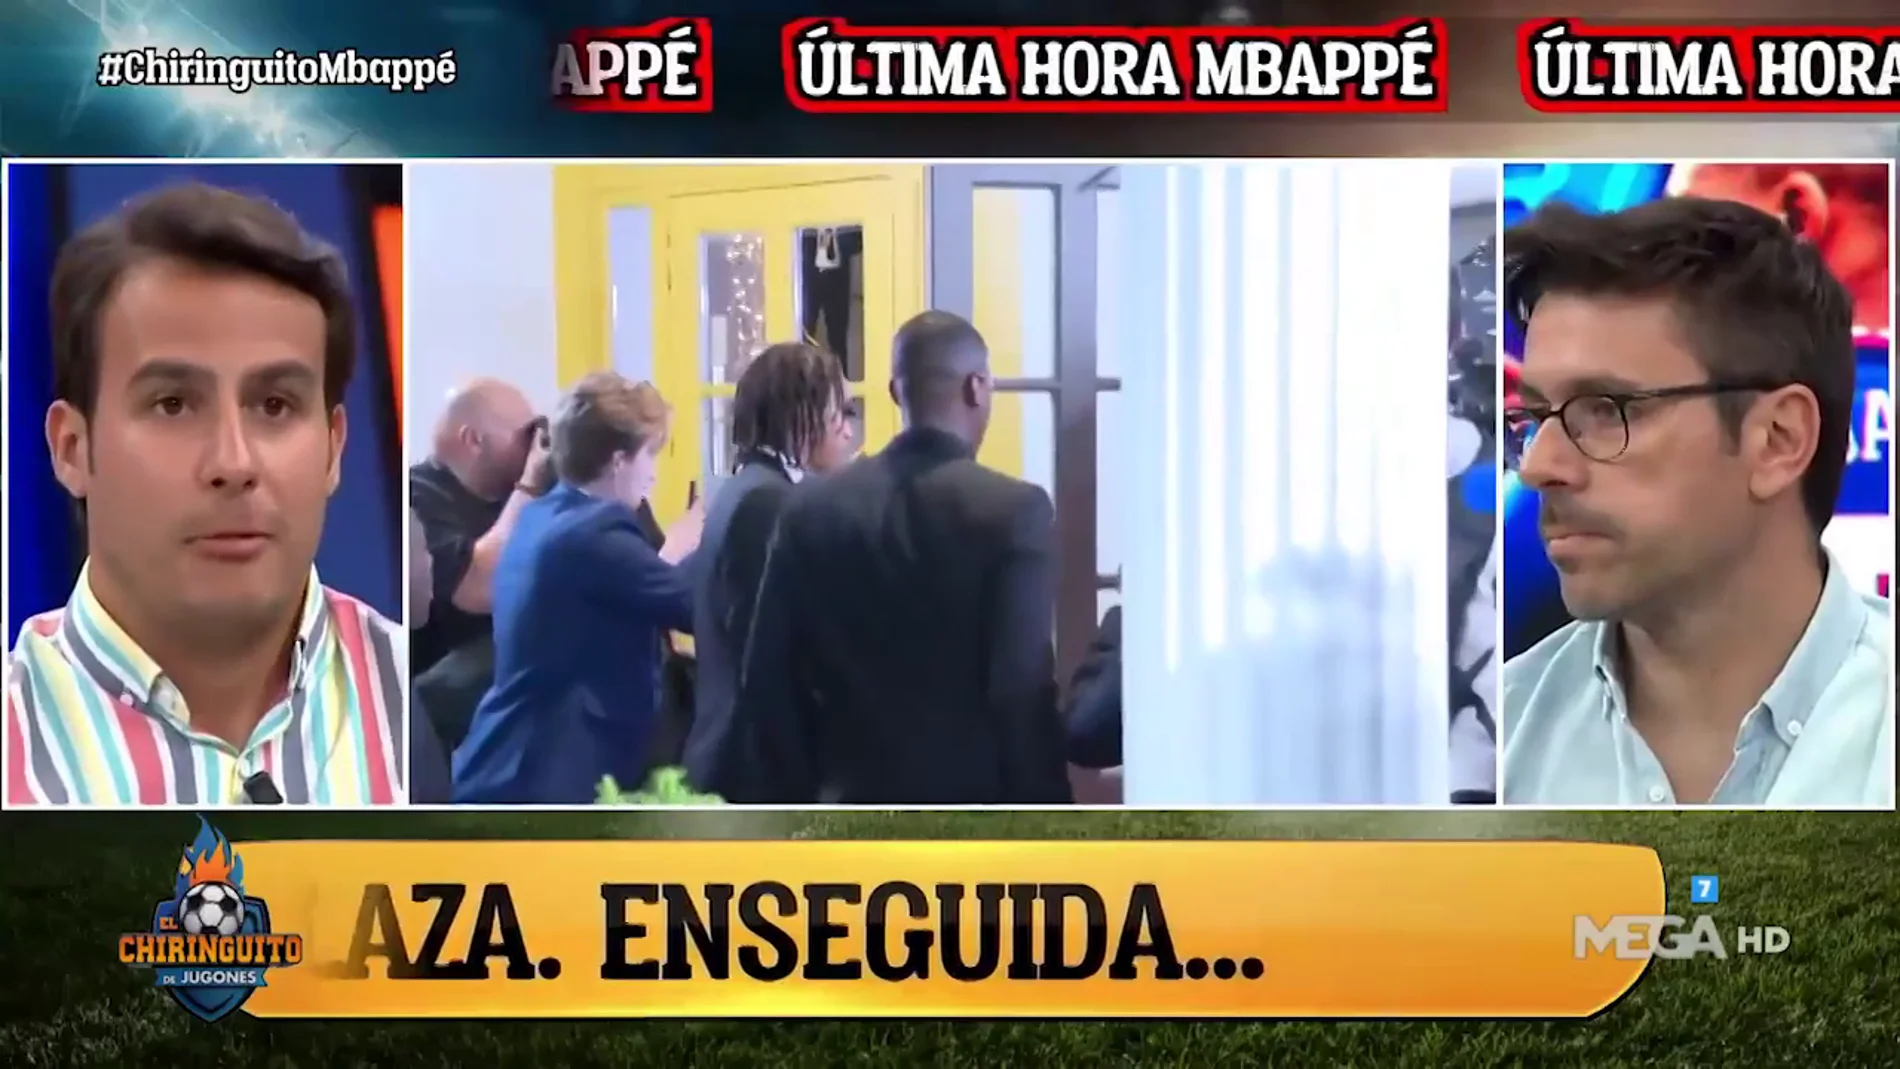 Juanfe Sanz: "Hay miedo a que Mbappé vaya al Madrid"